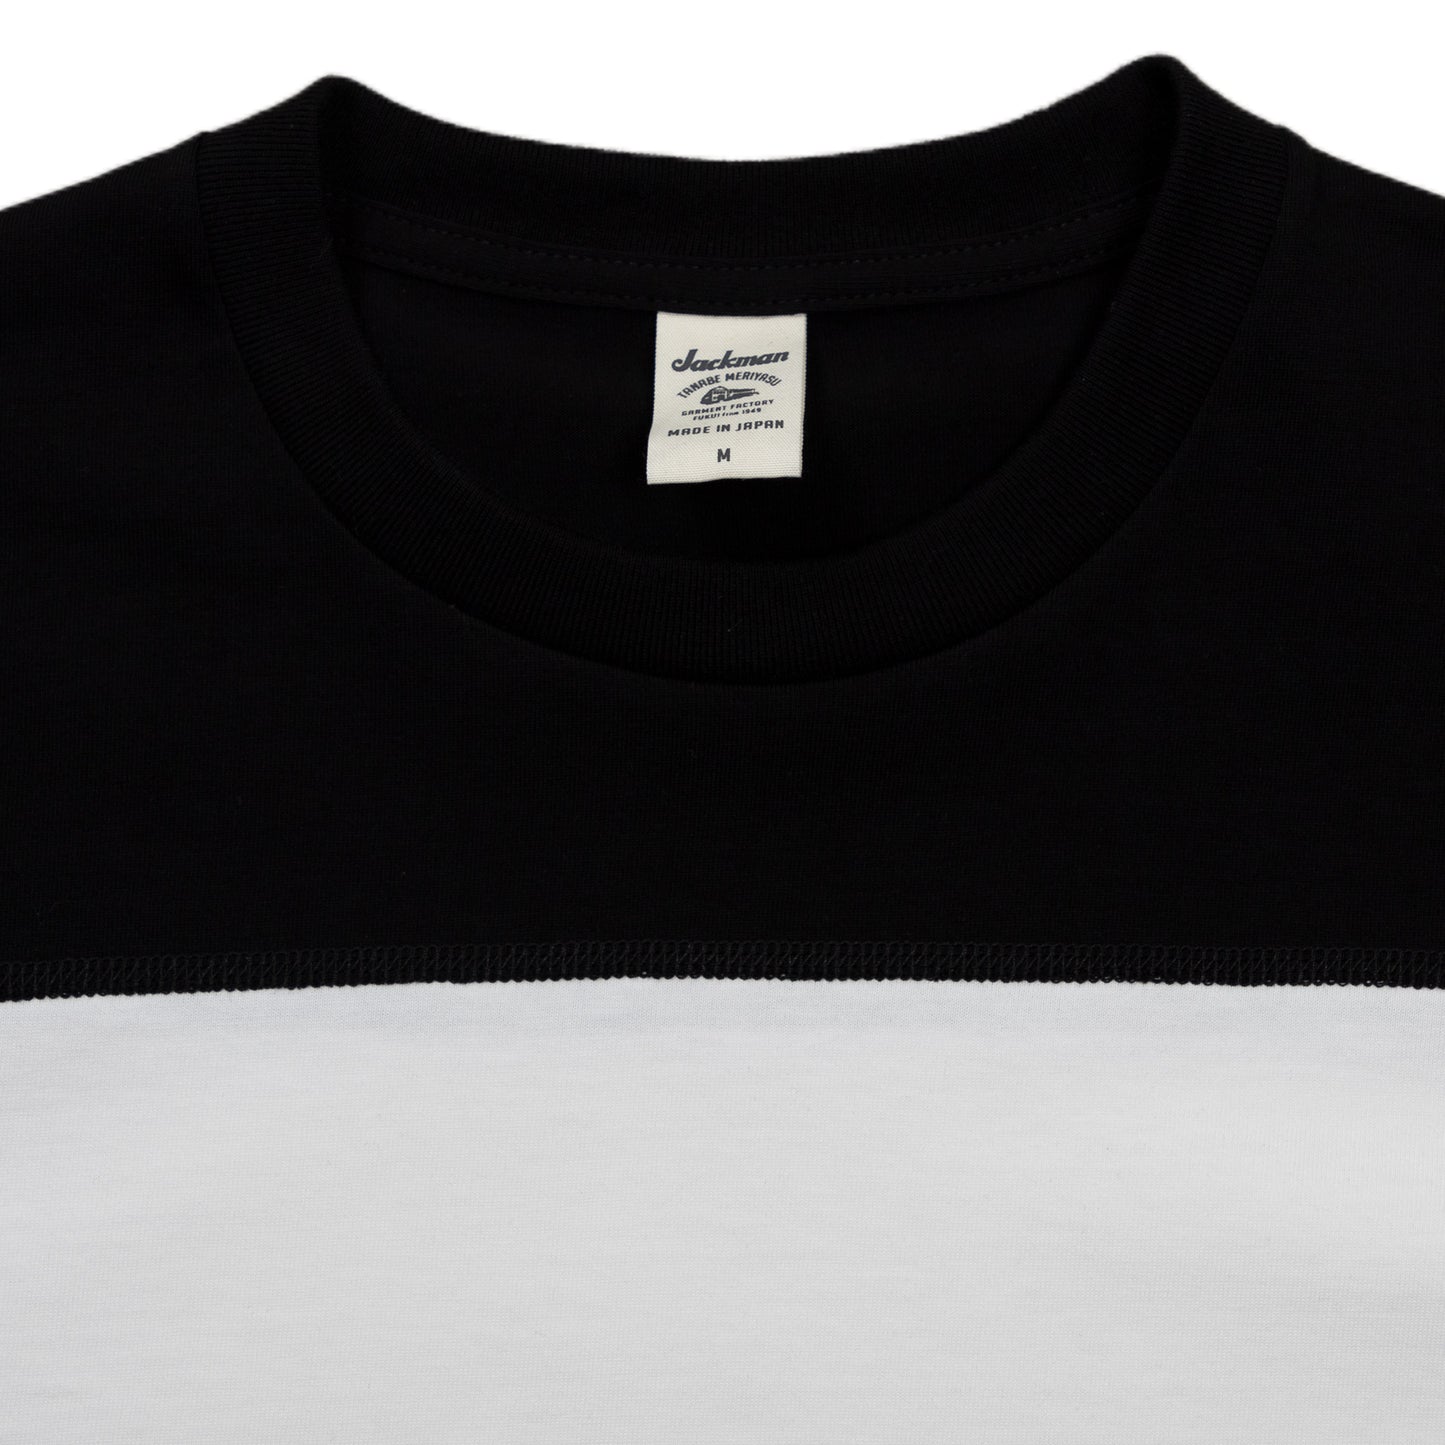 Border T-shirt Double Stripe - Black/White